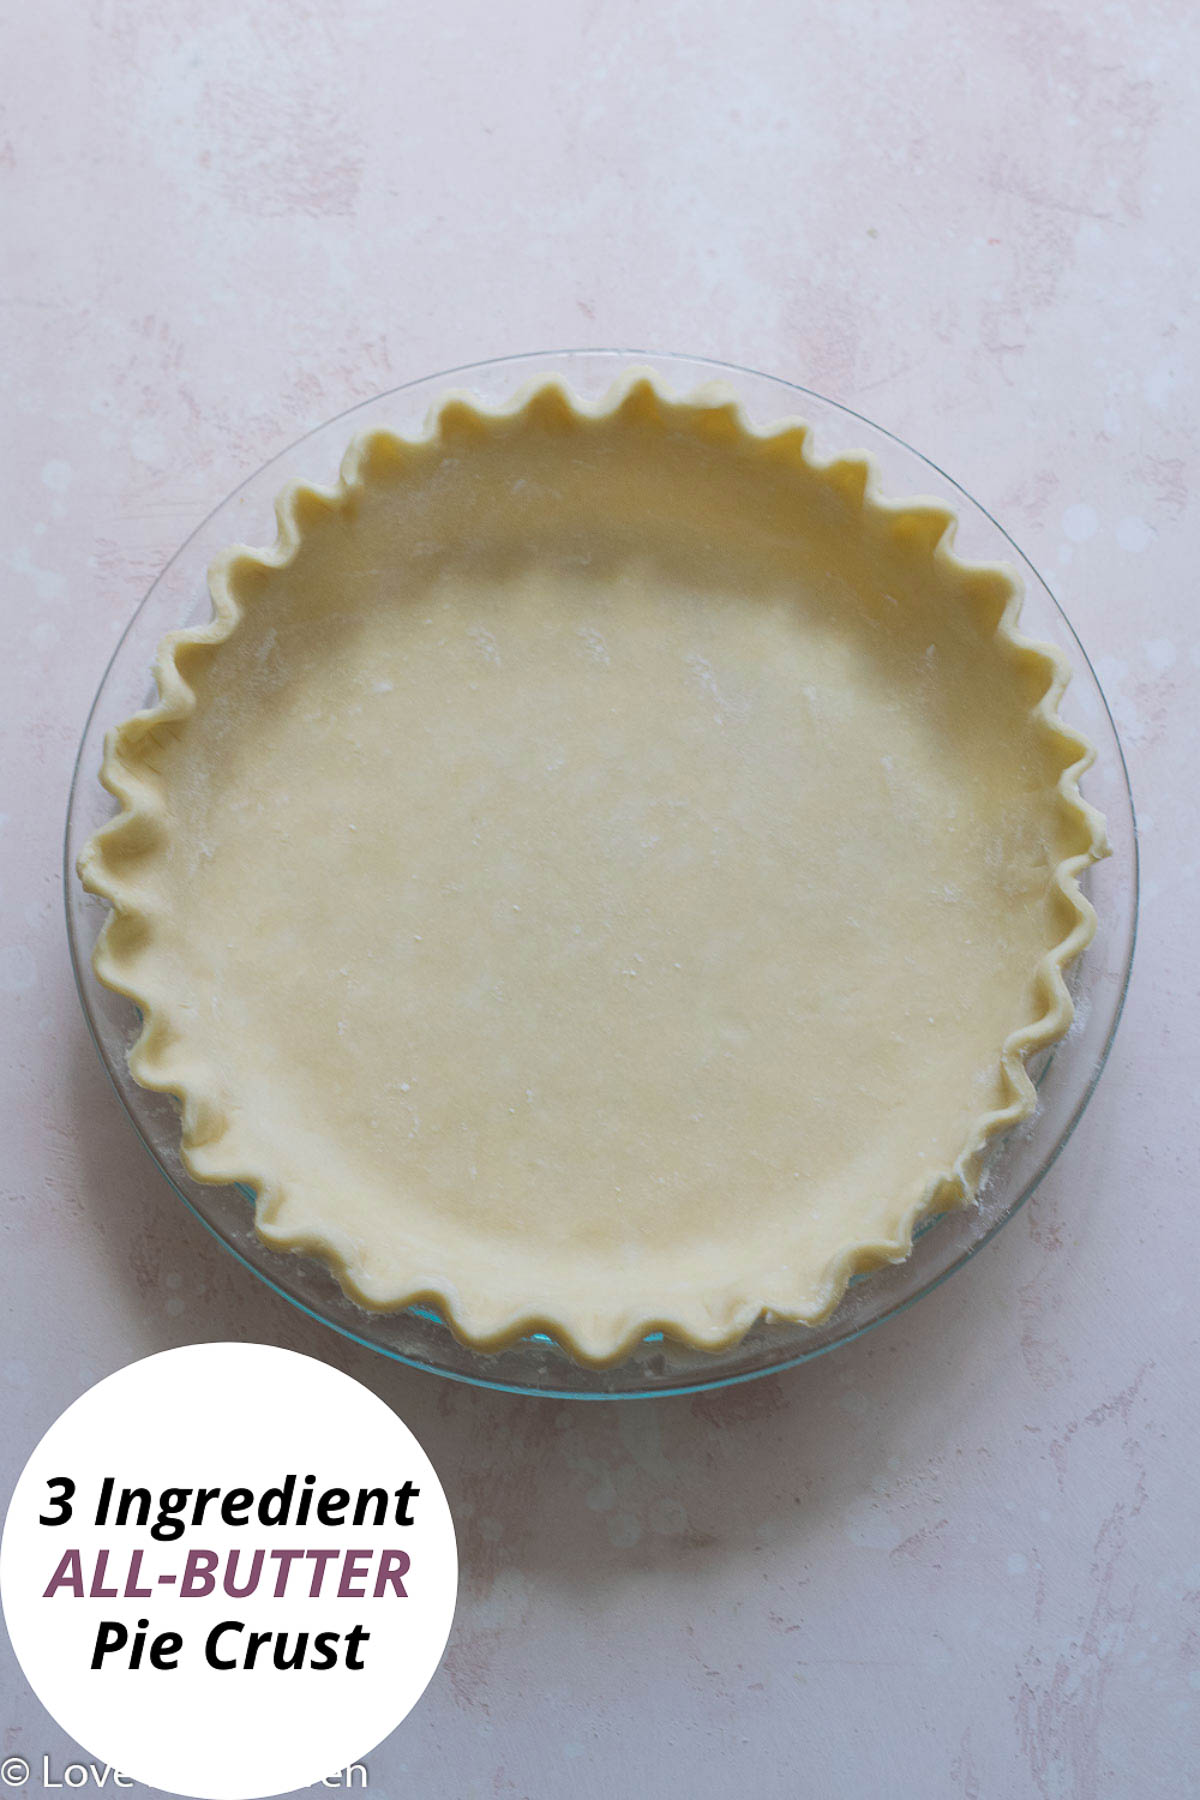 3 Ingredient Pie Crust